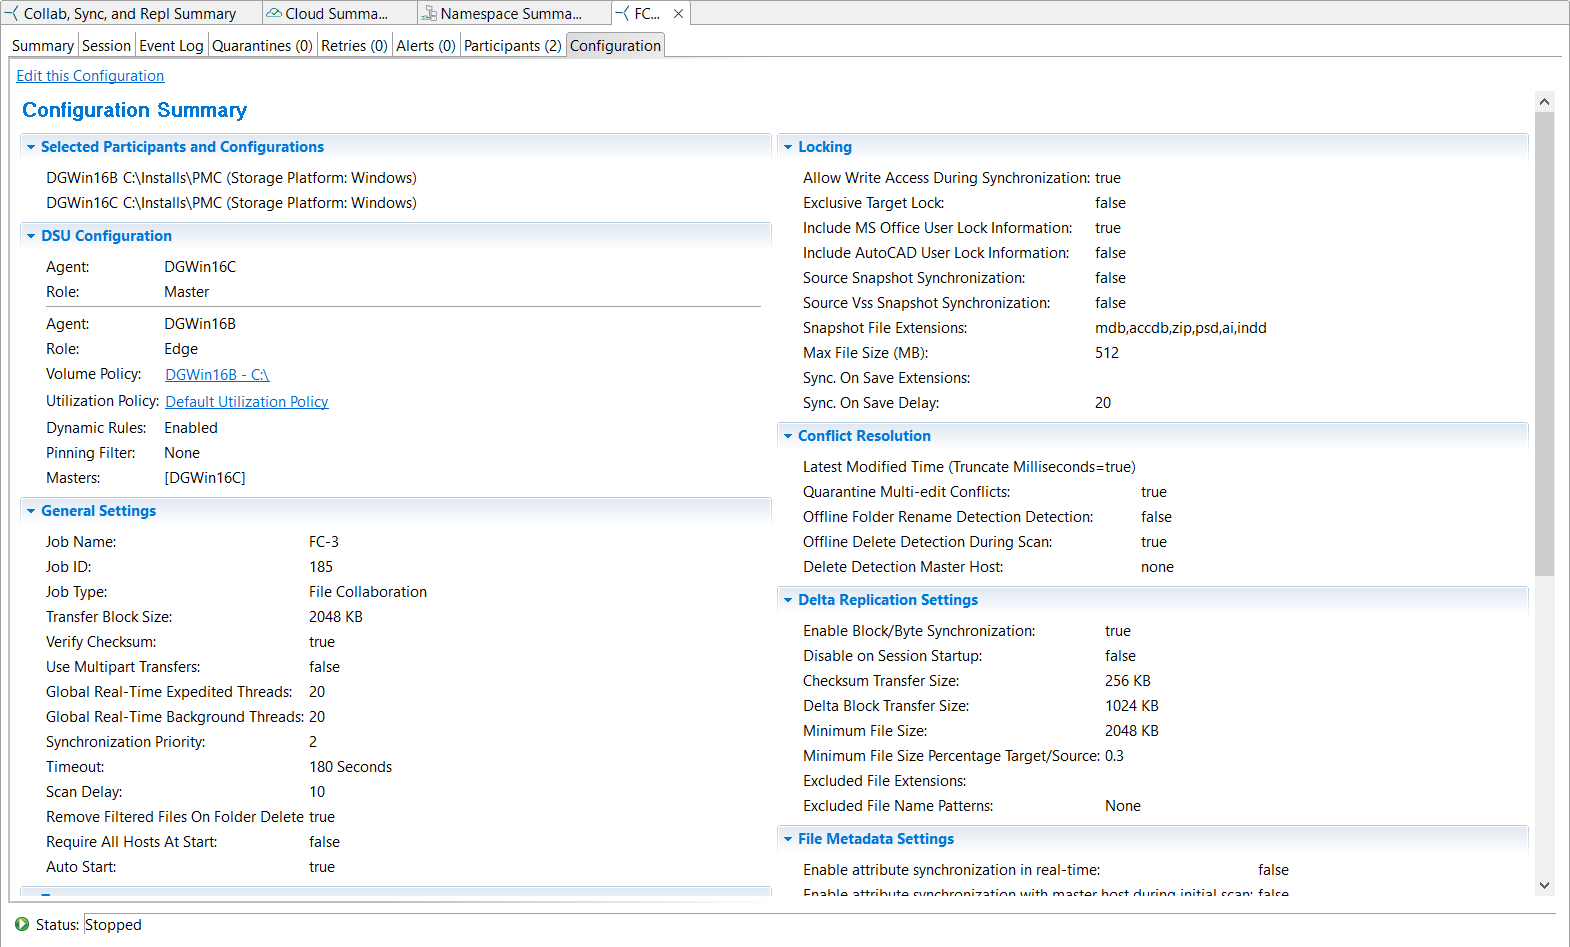 UI-Views-Runtime-File Collab Job-Configuration Tab